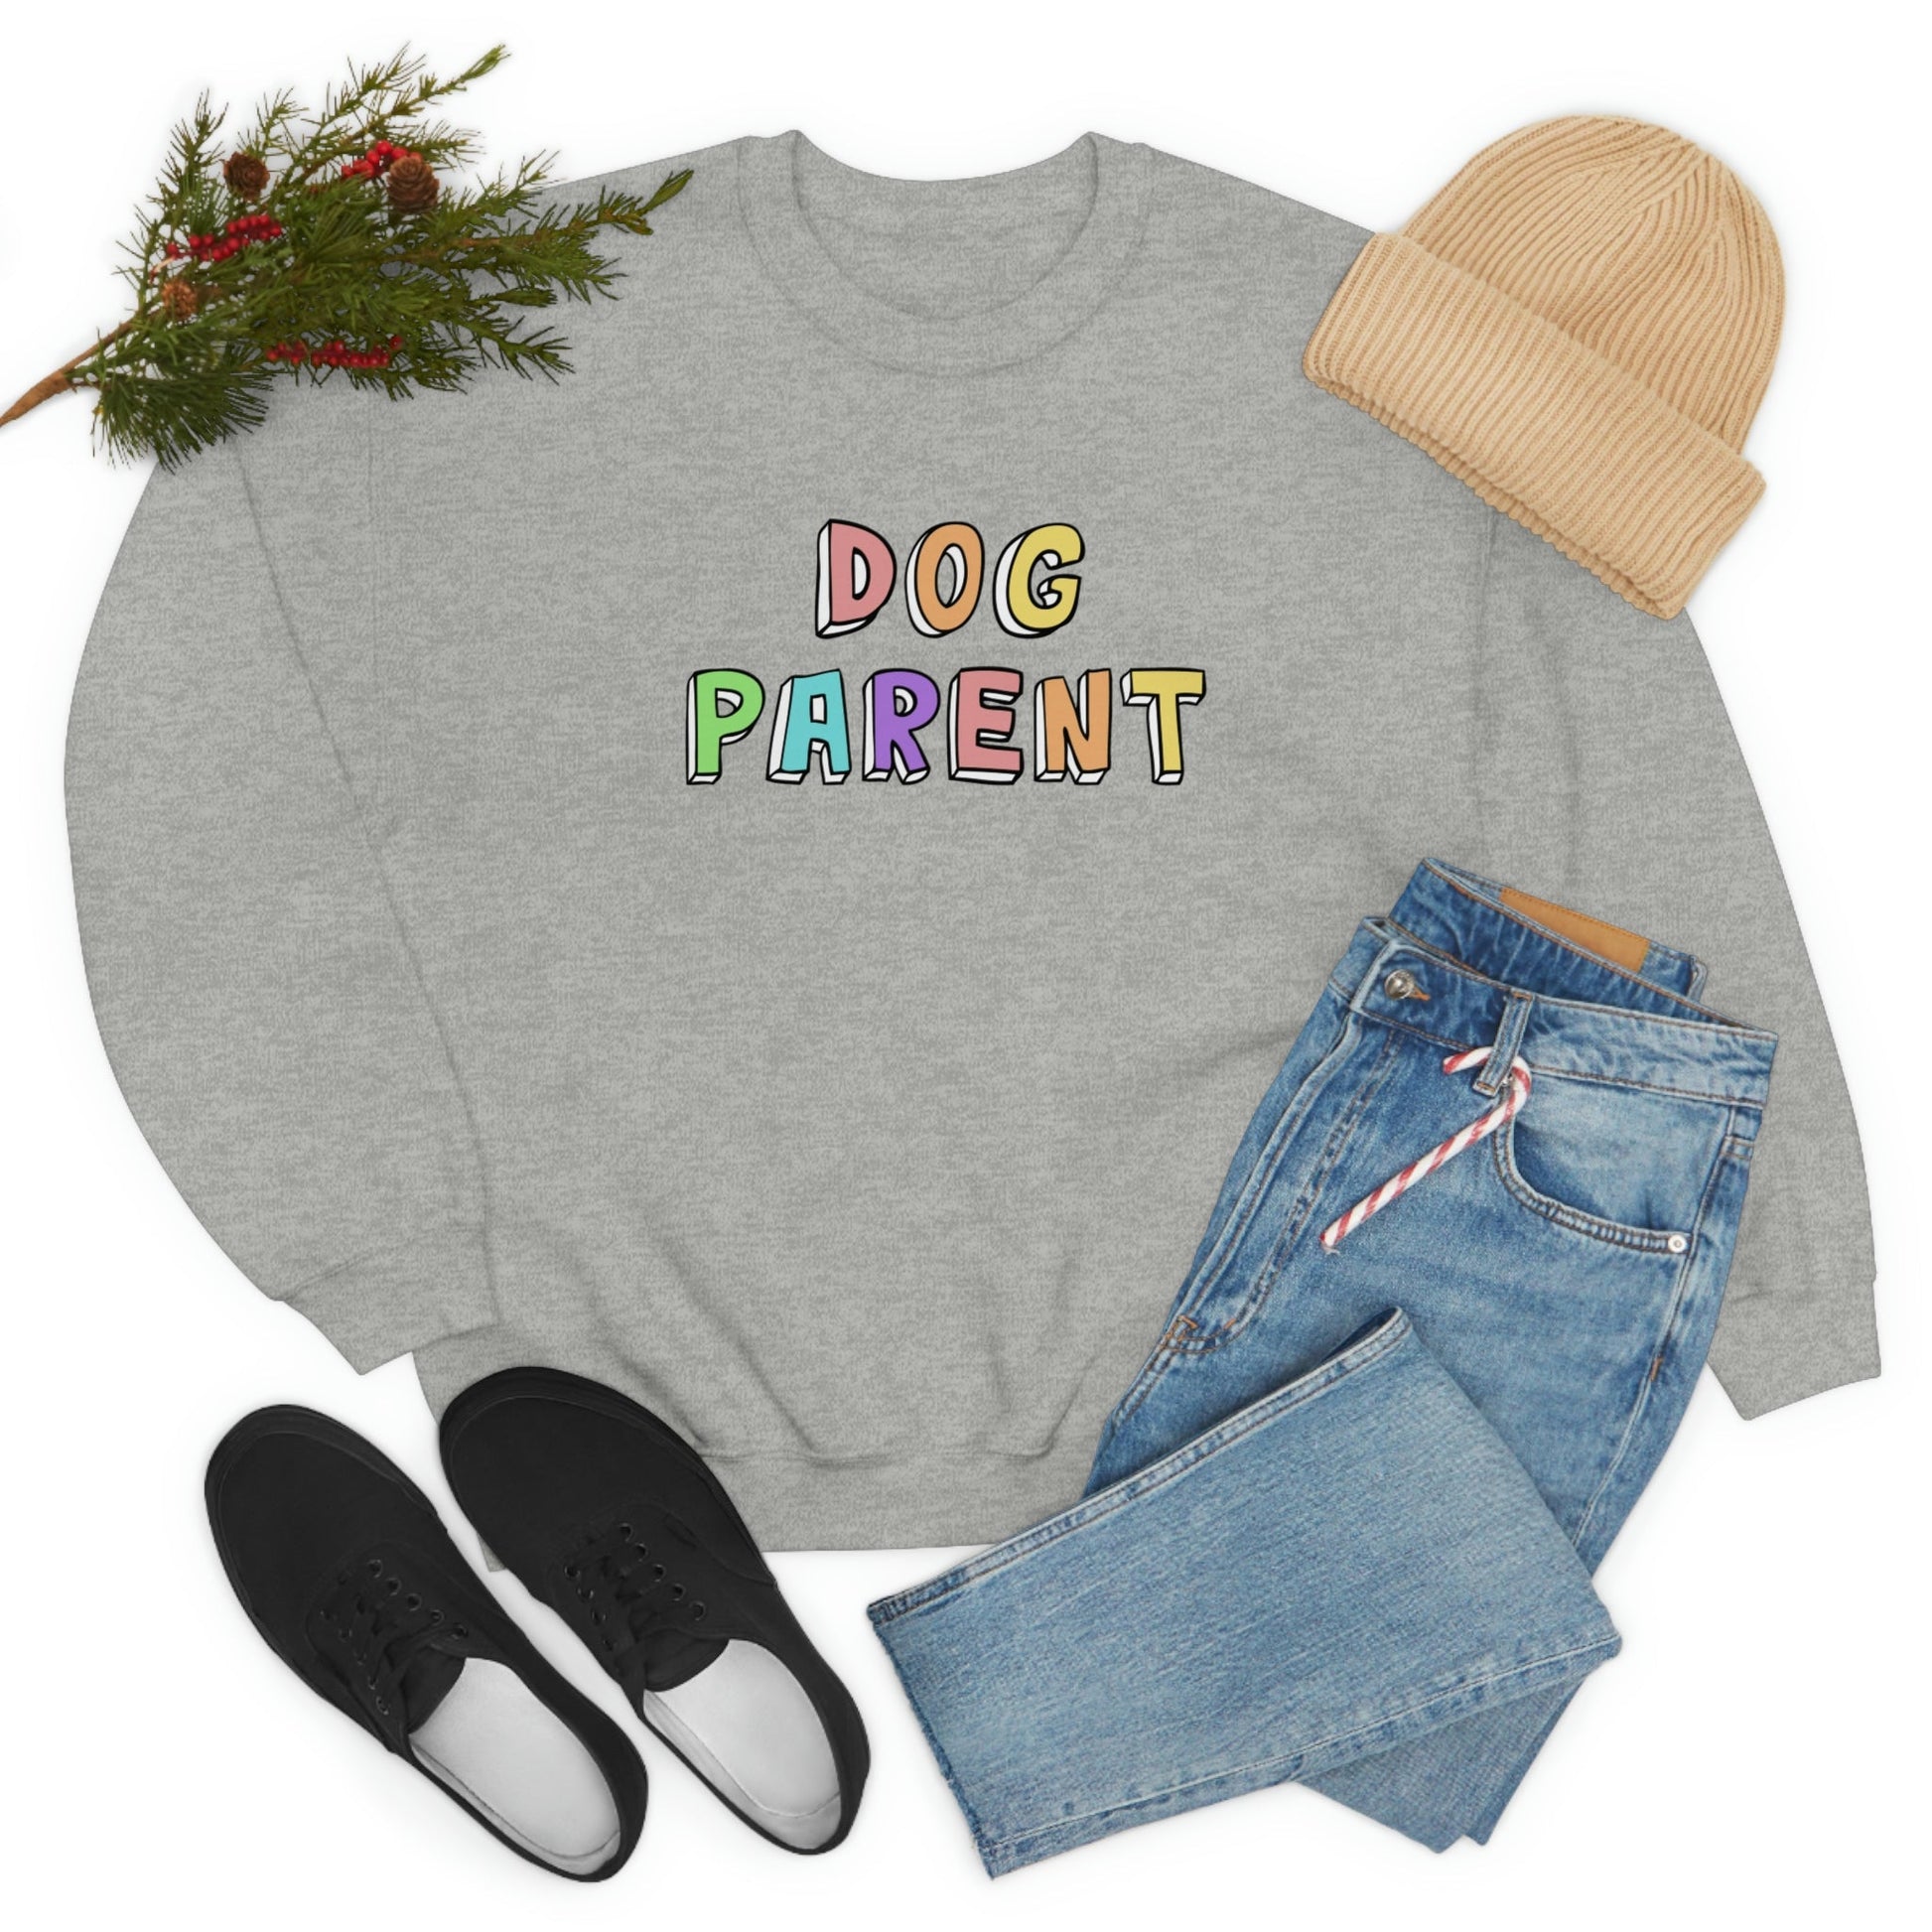 Dog Parent | Crewneck Sweatshirt - Detezi Designs-30069519031386160633